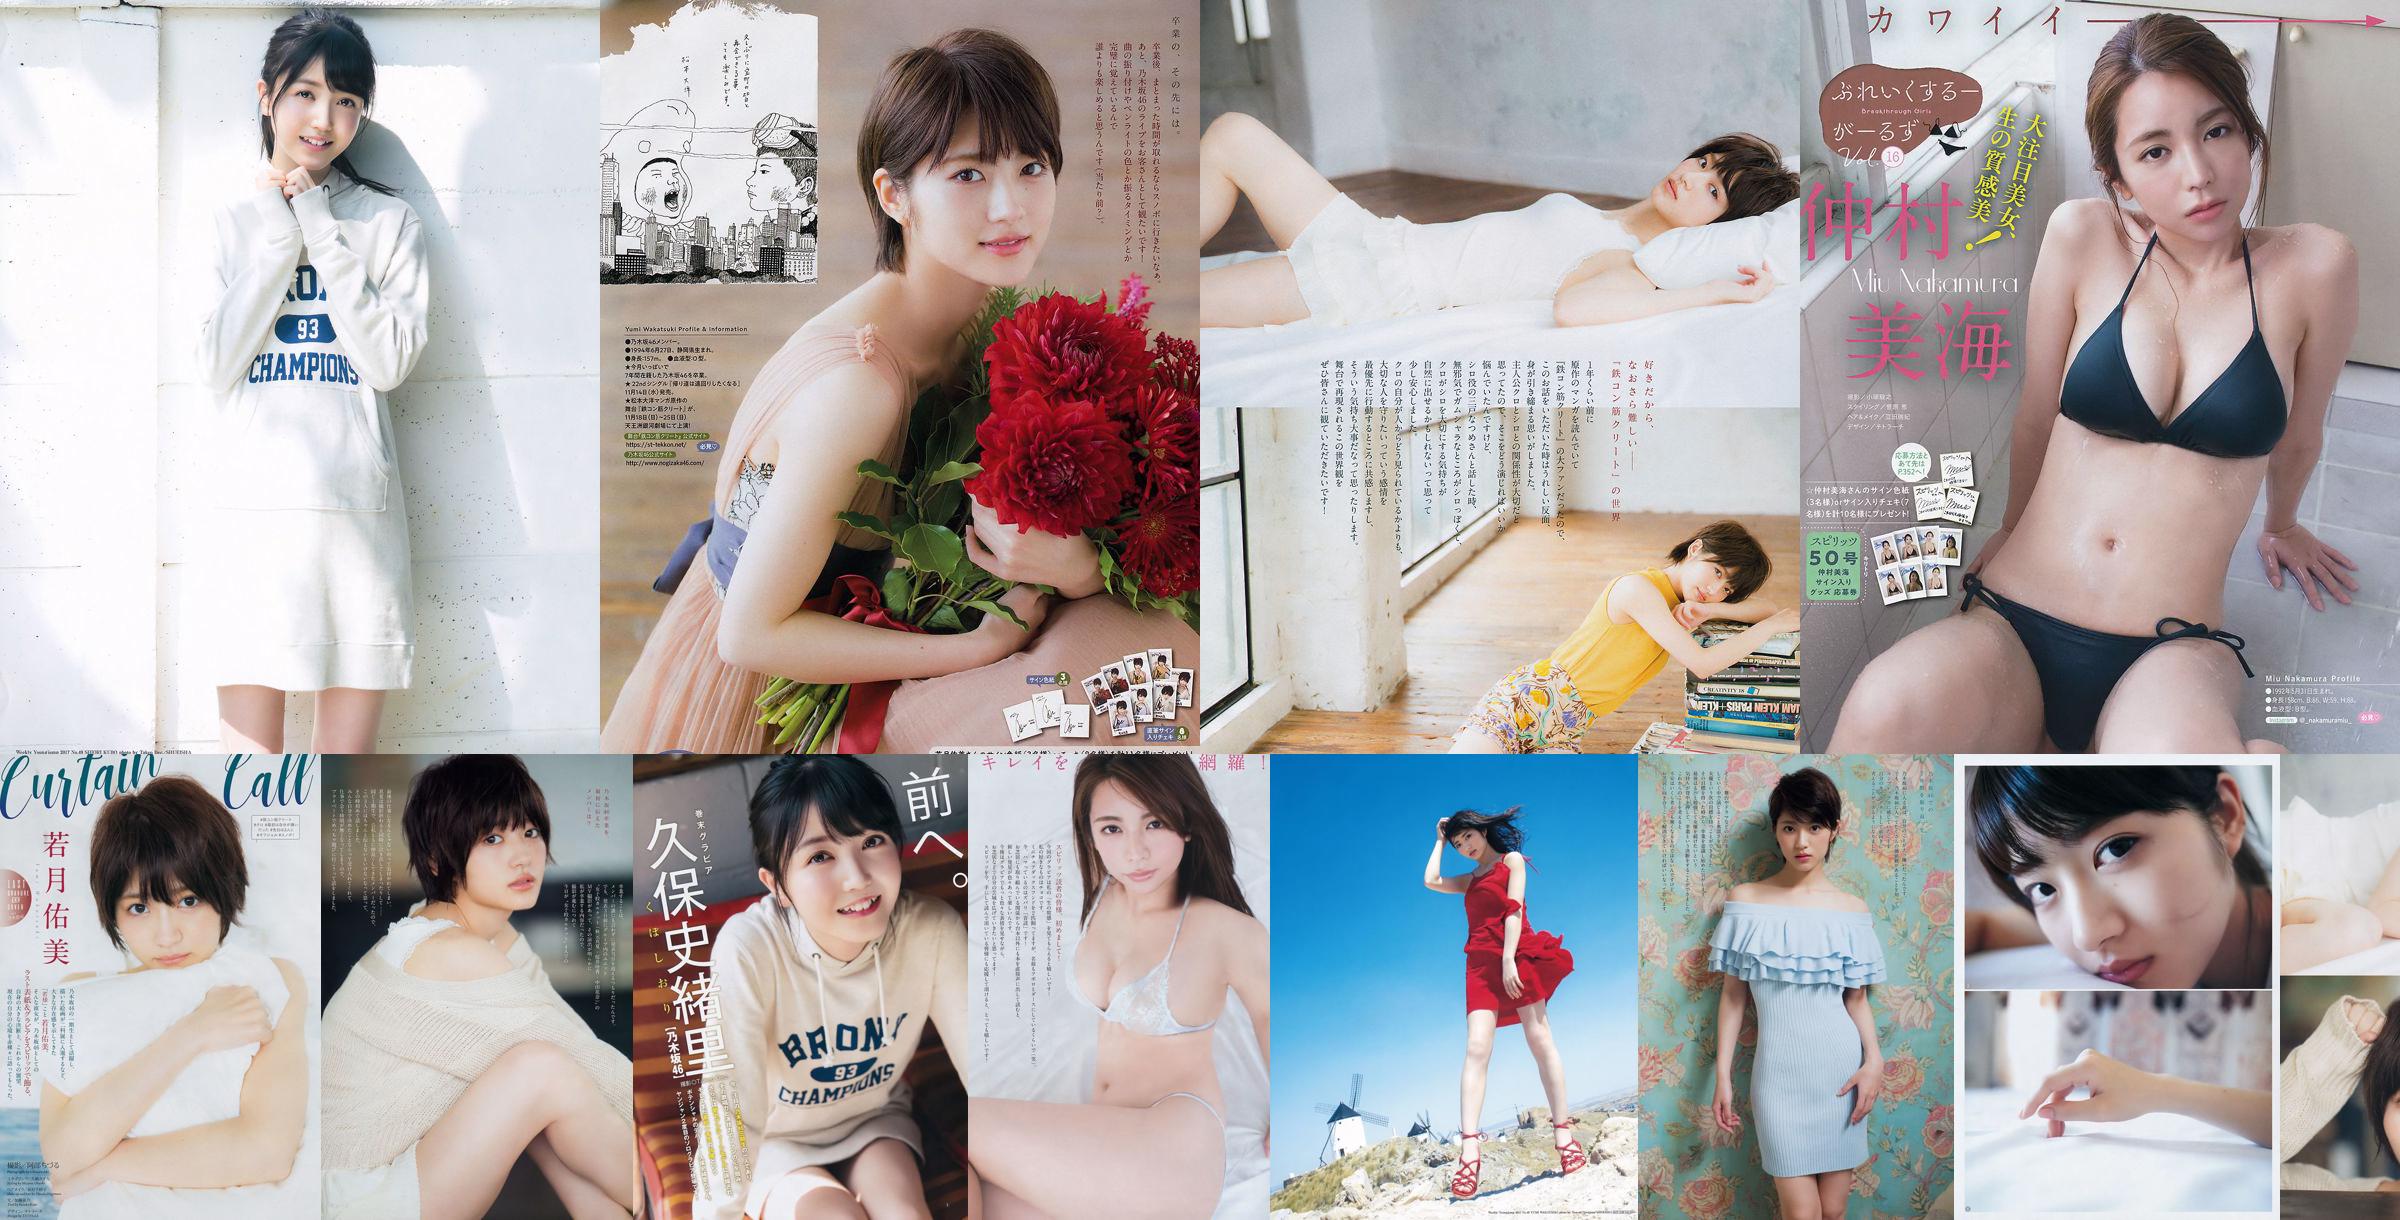 [Grands esprits de la bande dessinée hebdomadaire] Wakazuki Yumi Nakamura Mihai 2018 Magazine photo n ° 50 No.e0191d Page 1